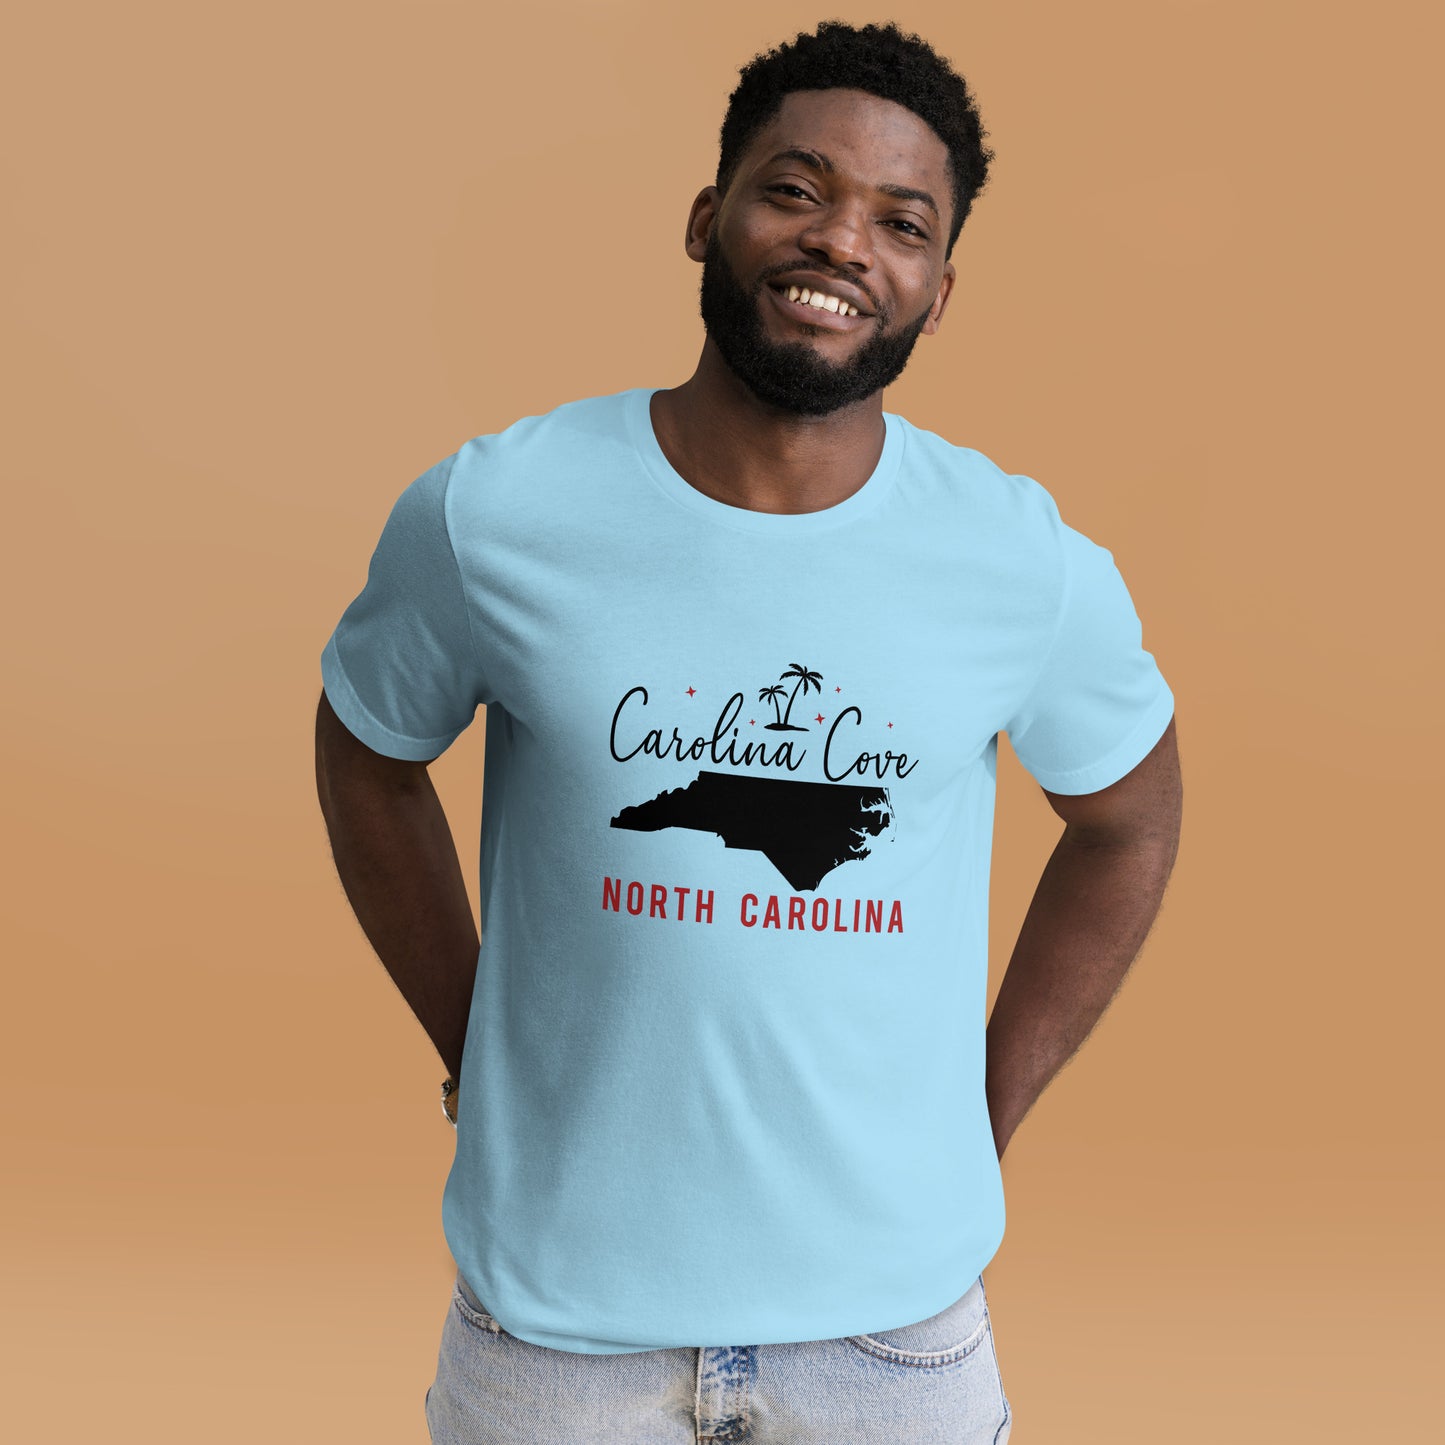 Unisex t-shirt (FEATURING CAROLINA COVE, NORTH CAROLINA)